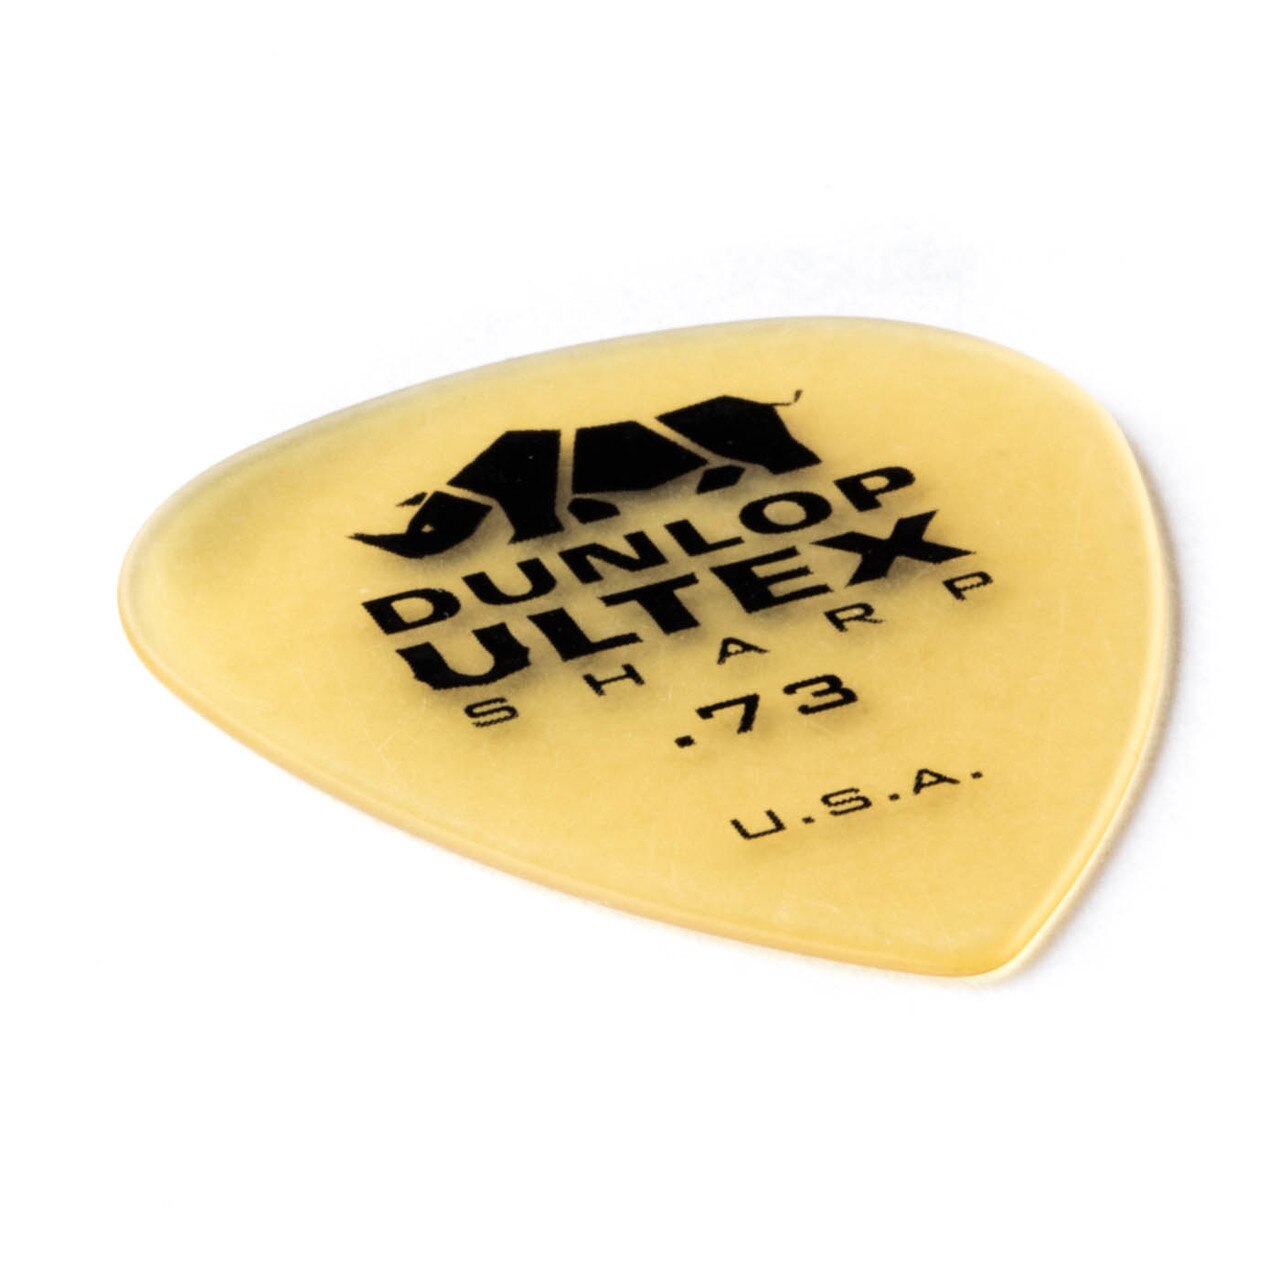 Jim Dunlop Ultex Sharp 433 0.73mm - Púas - Variation 1